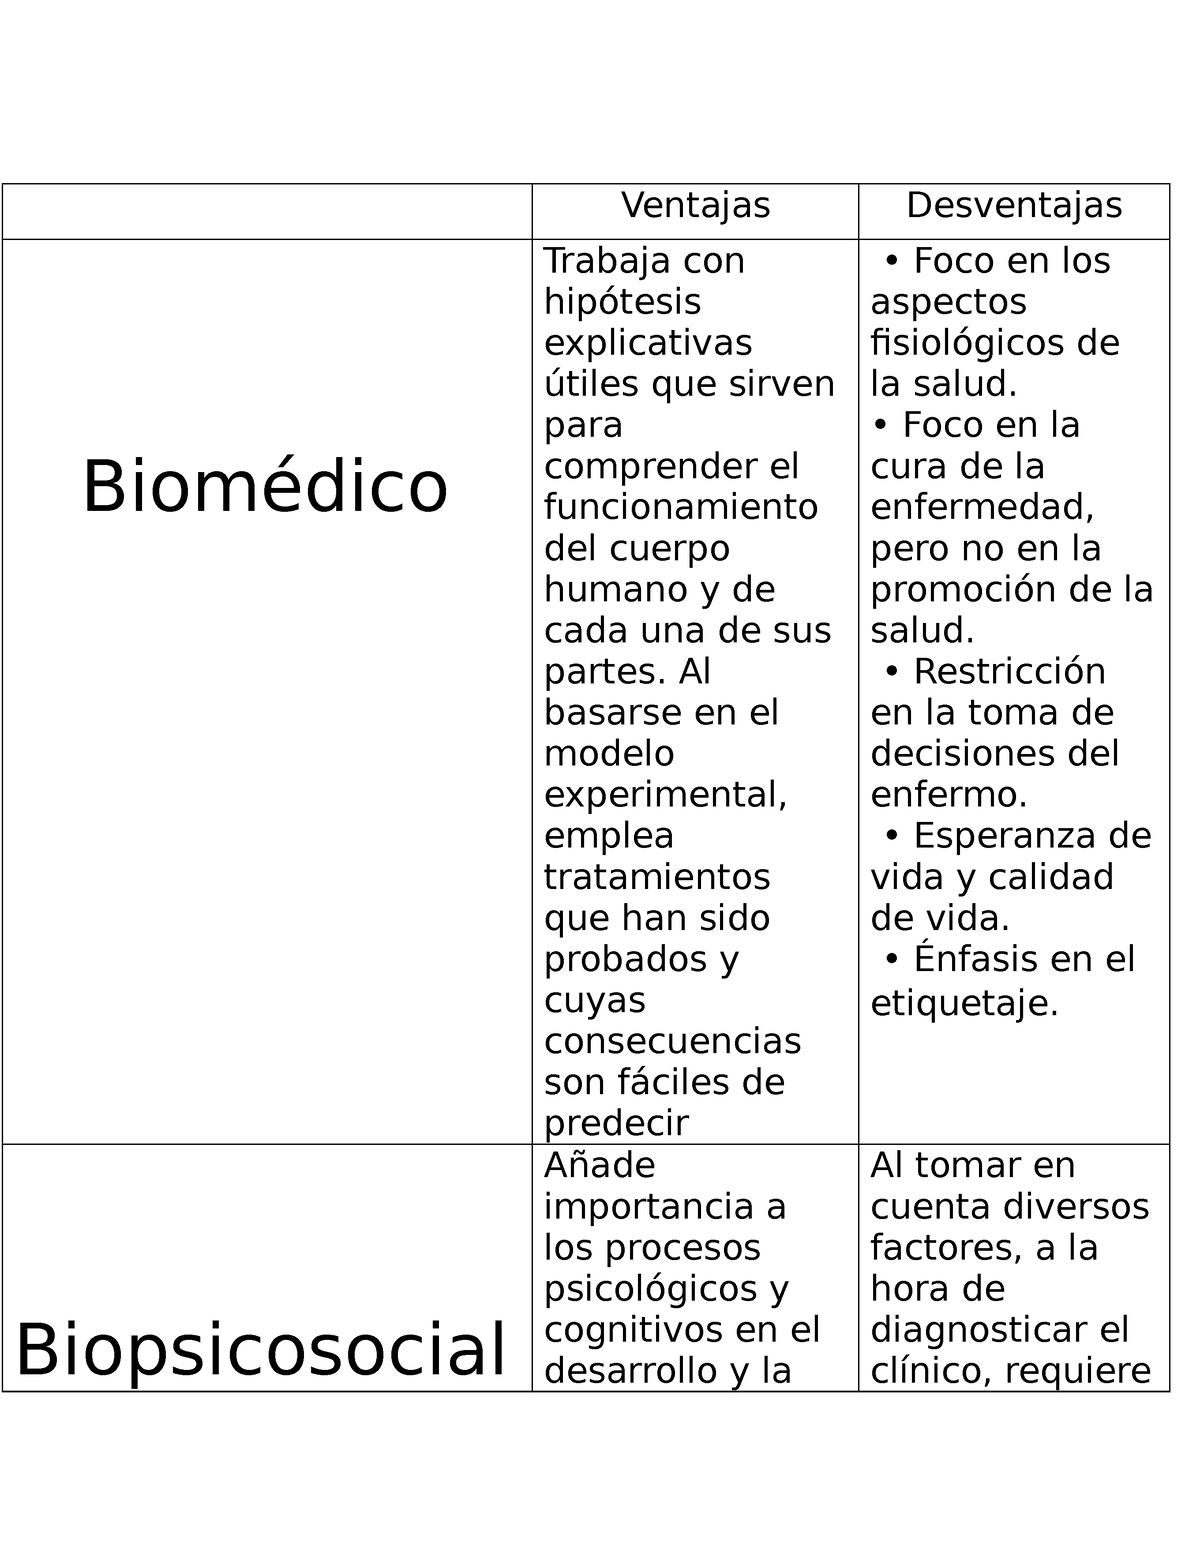 Modelo Biomedico y biopsicosocial - Ventajas Desventajas Biomédico Trabaja  con hipótesis - Studocu